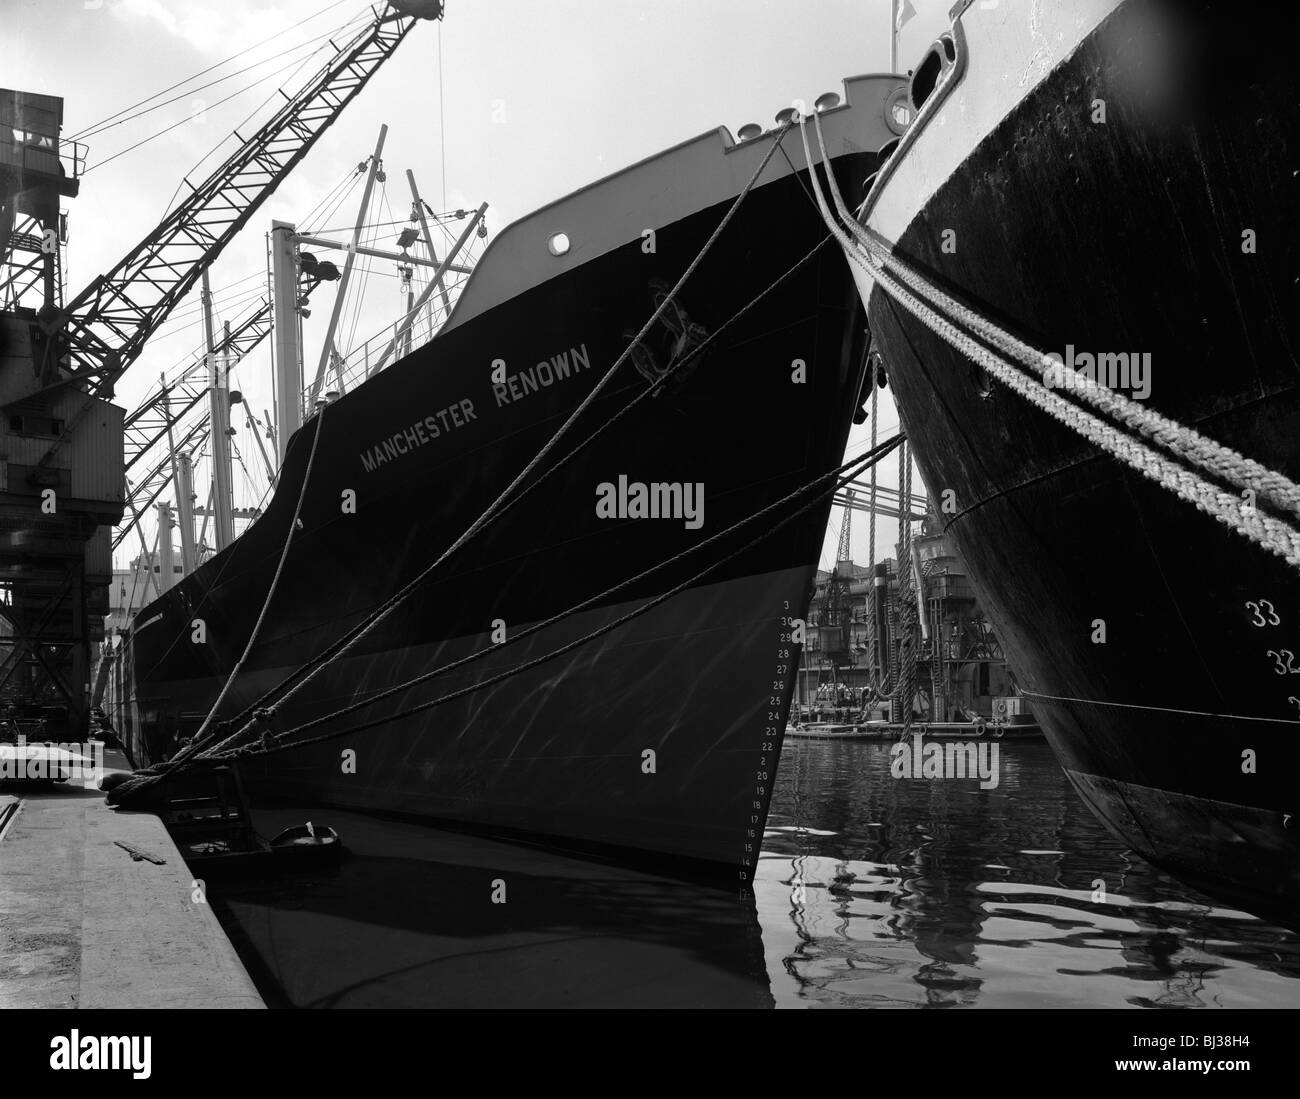 La renombrada "Manchester" en el dock en el Manchester Ship Canal, 1964. Artista: Michael Walters Foto de stock